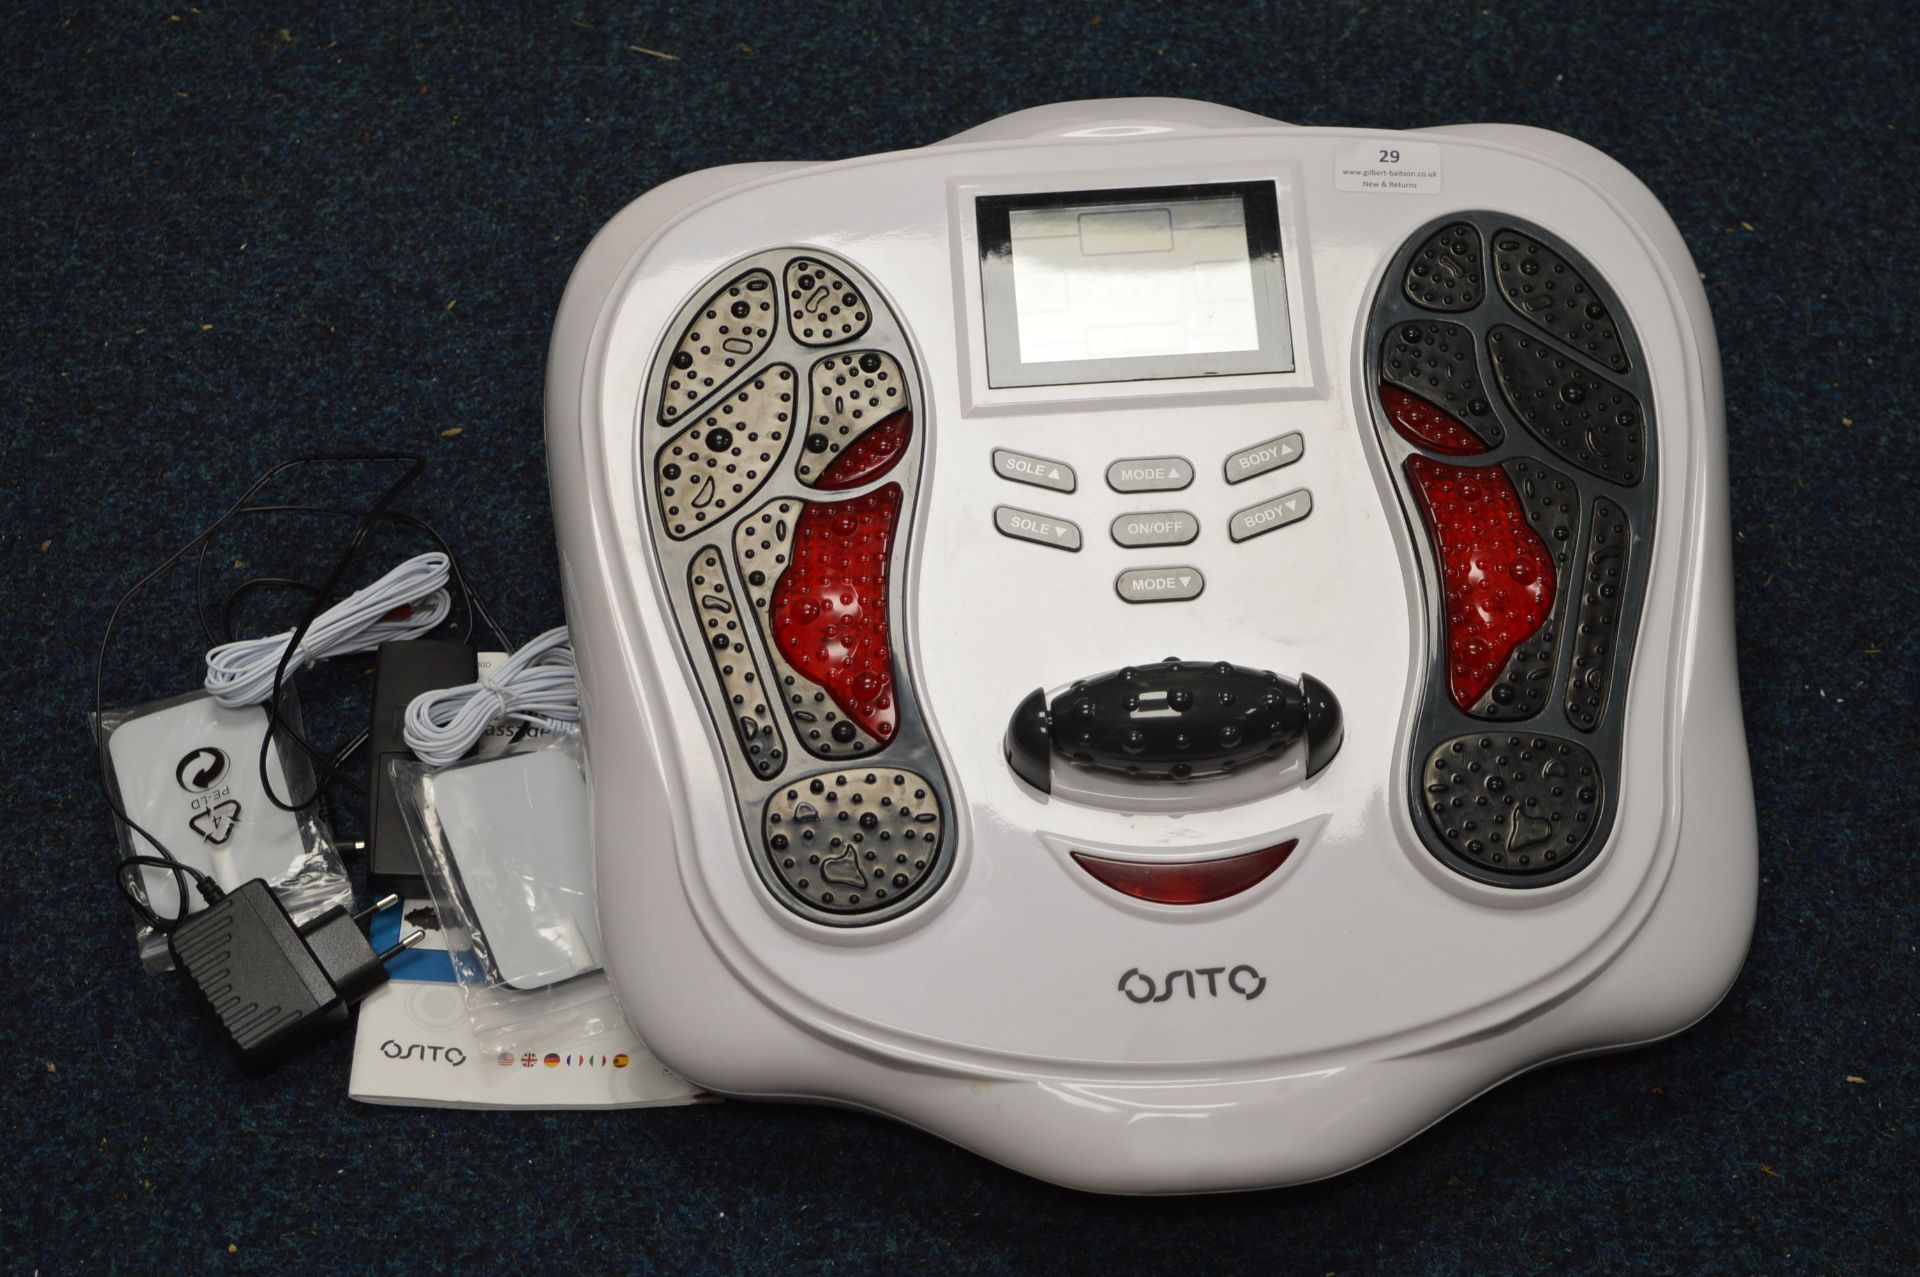 *Osito Electronic Muscle Simulator Foot Massager